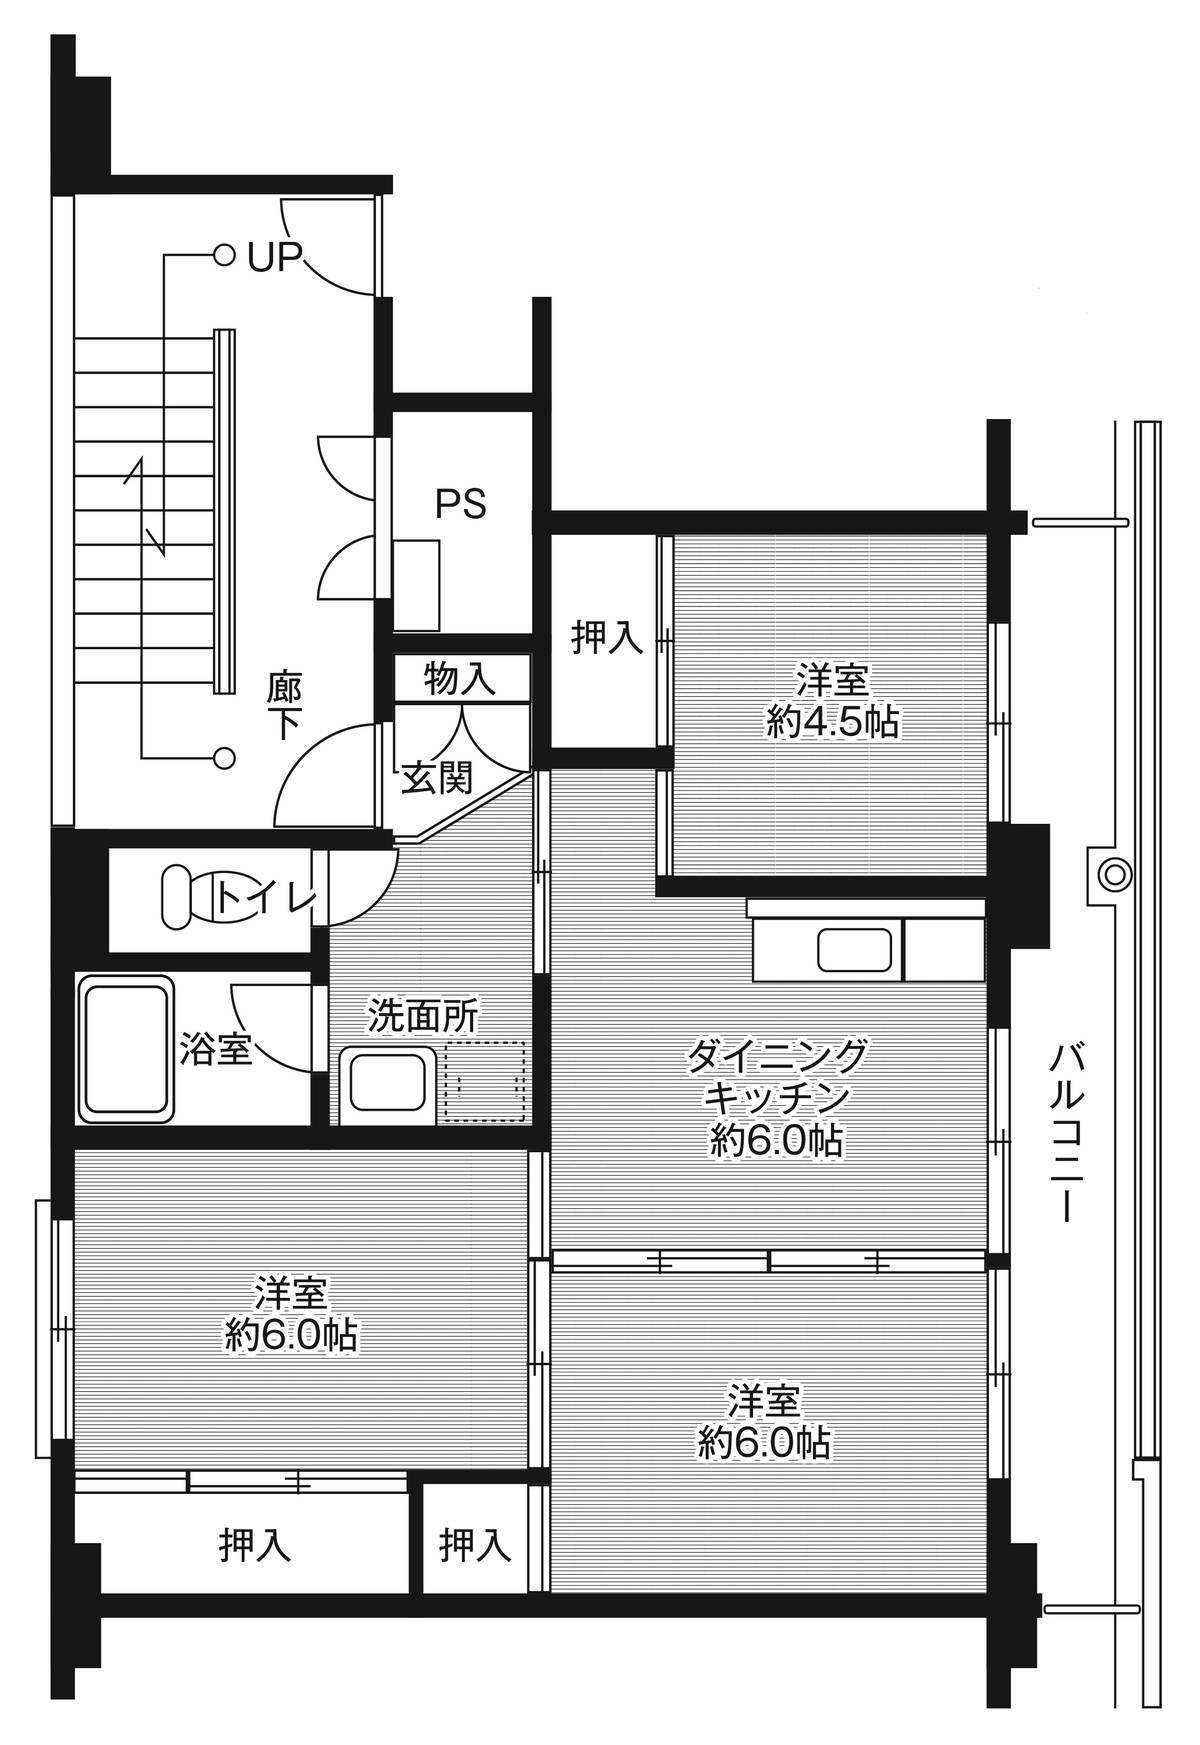 3DK floorplan of Village House Yoshihara in Yamagata-shi